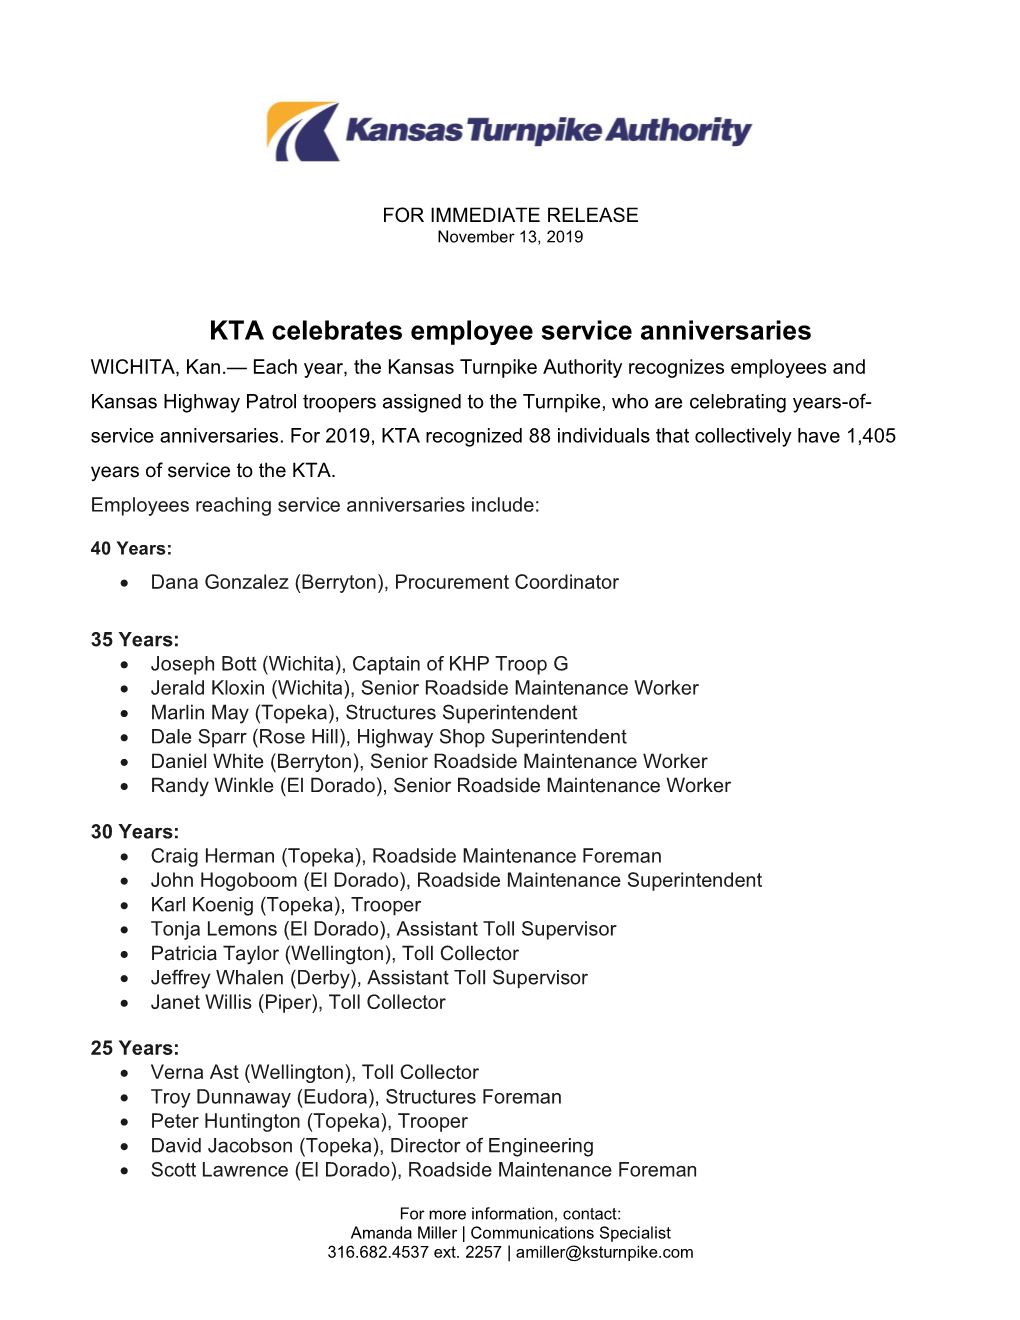 KTA Celebrates Employee Service Anniversaries